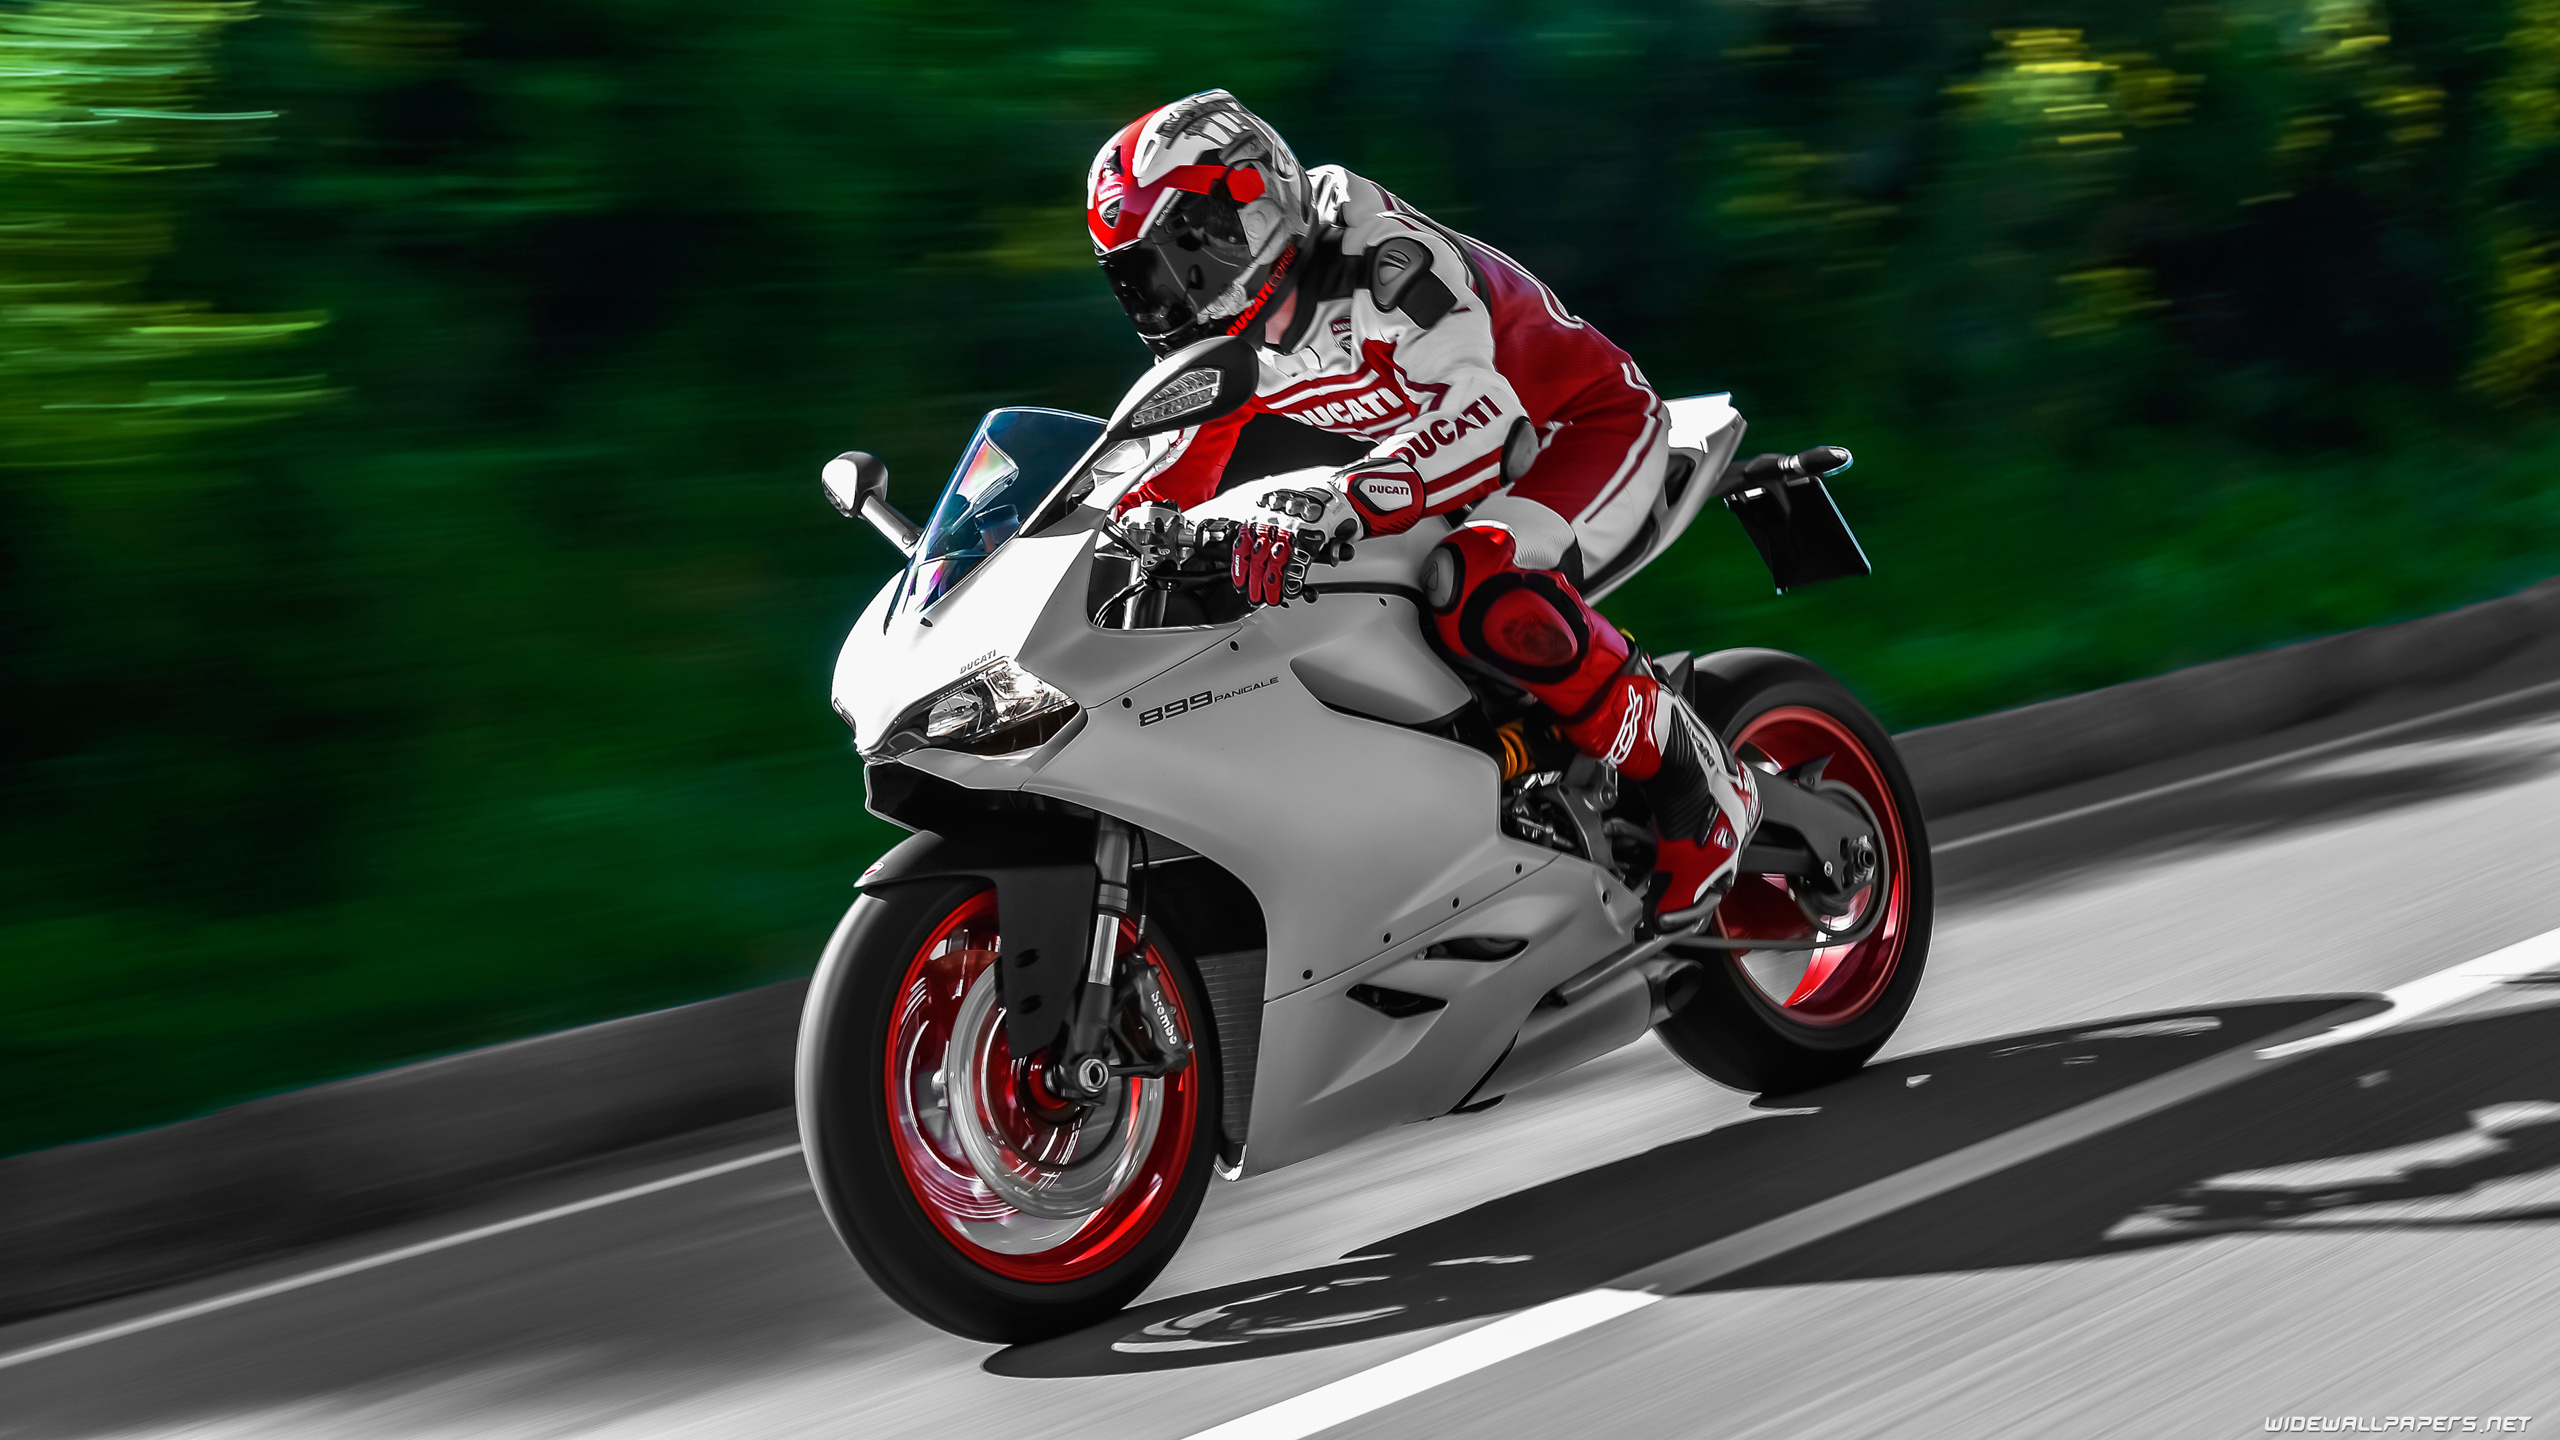 Ducati Superbike 899 Panigale motorcycle desktop 2560x1440